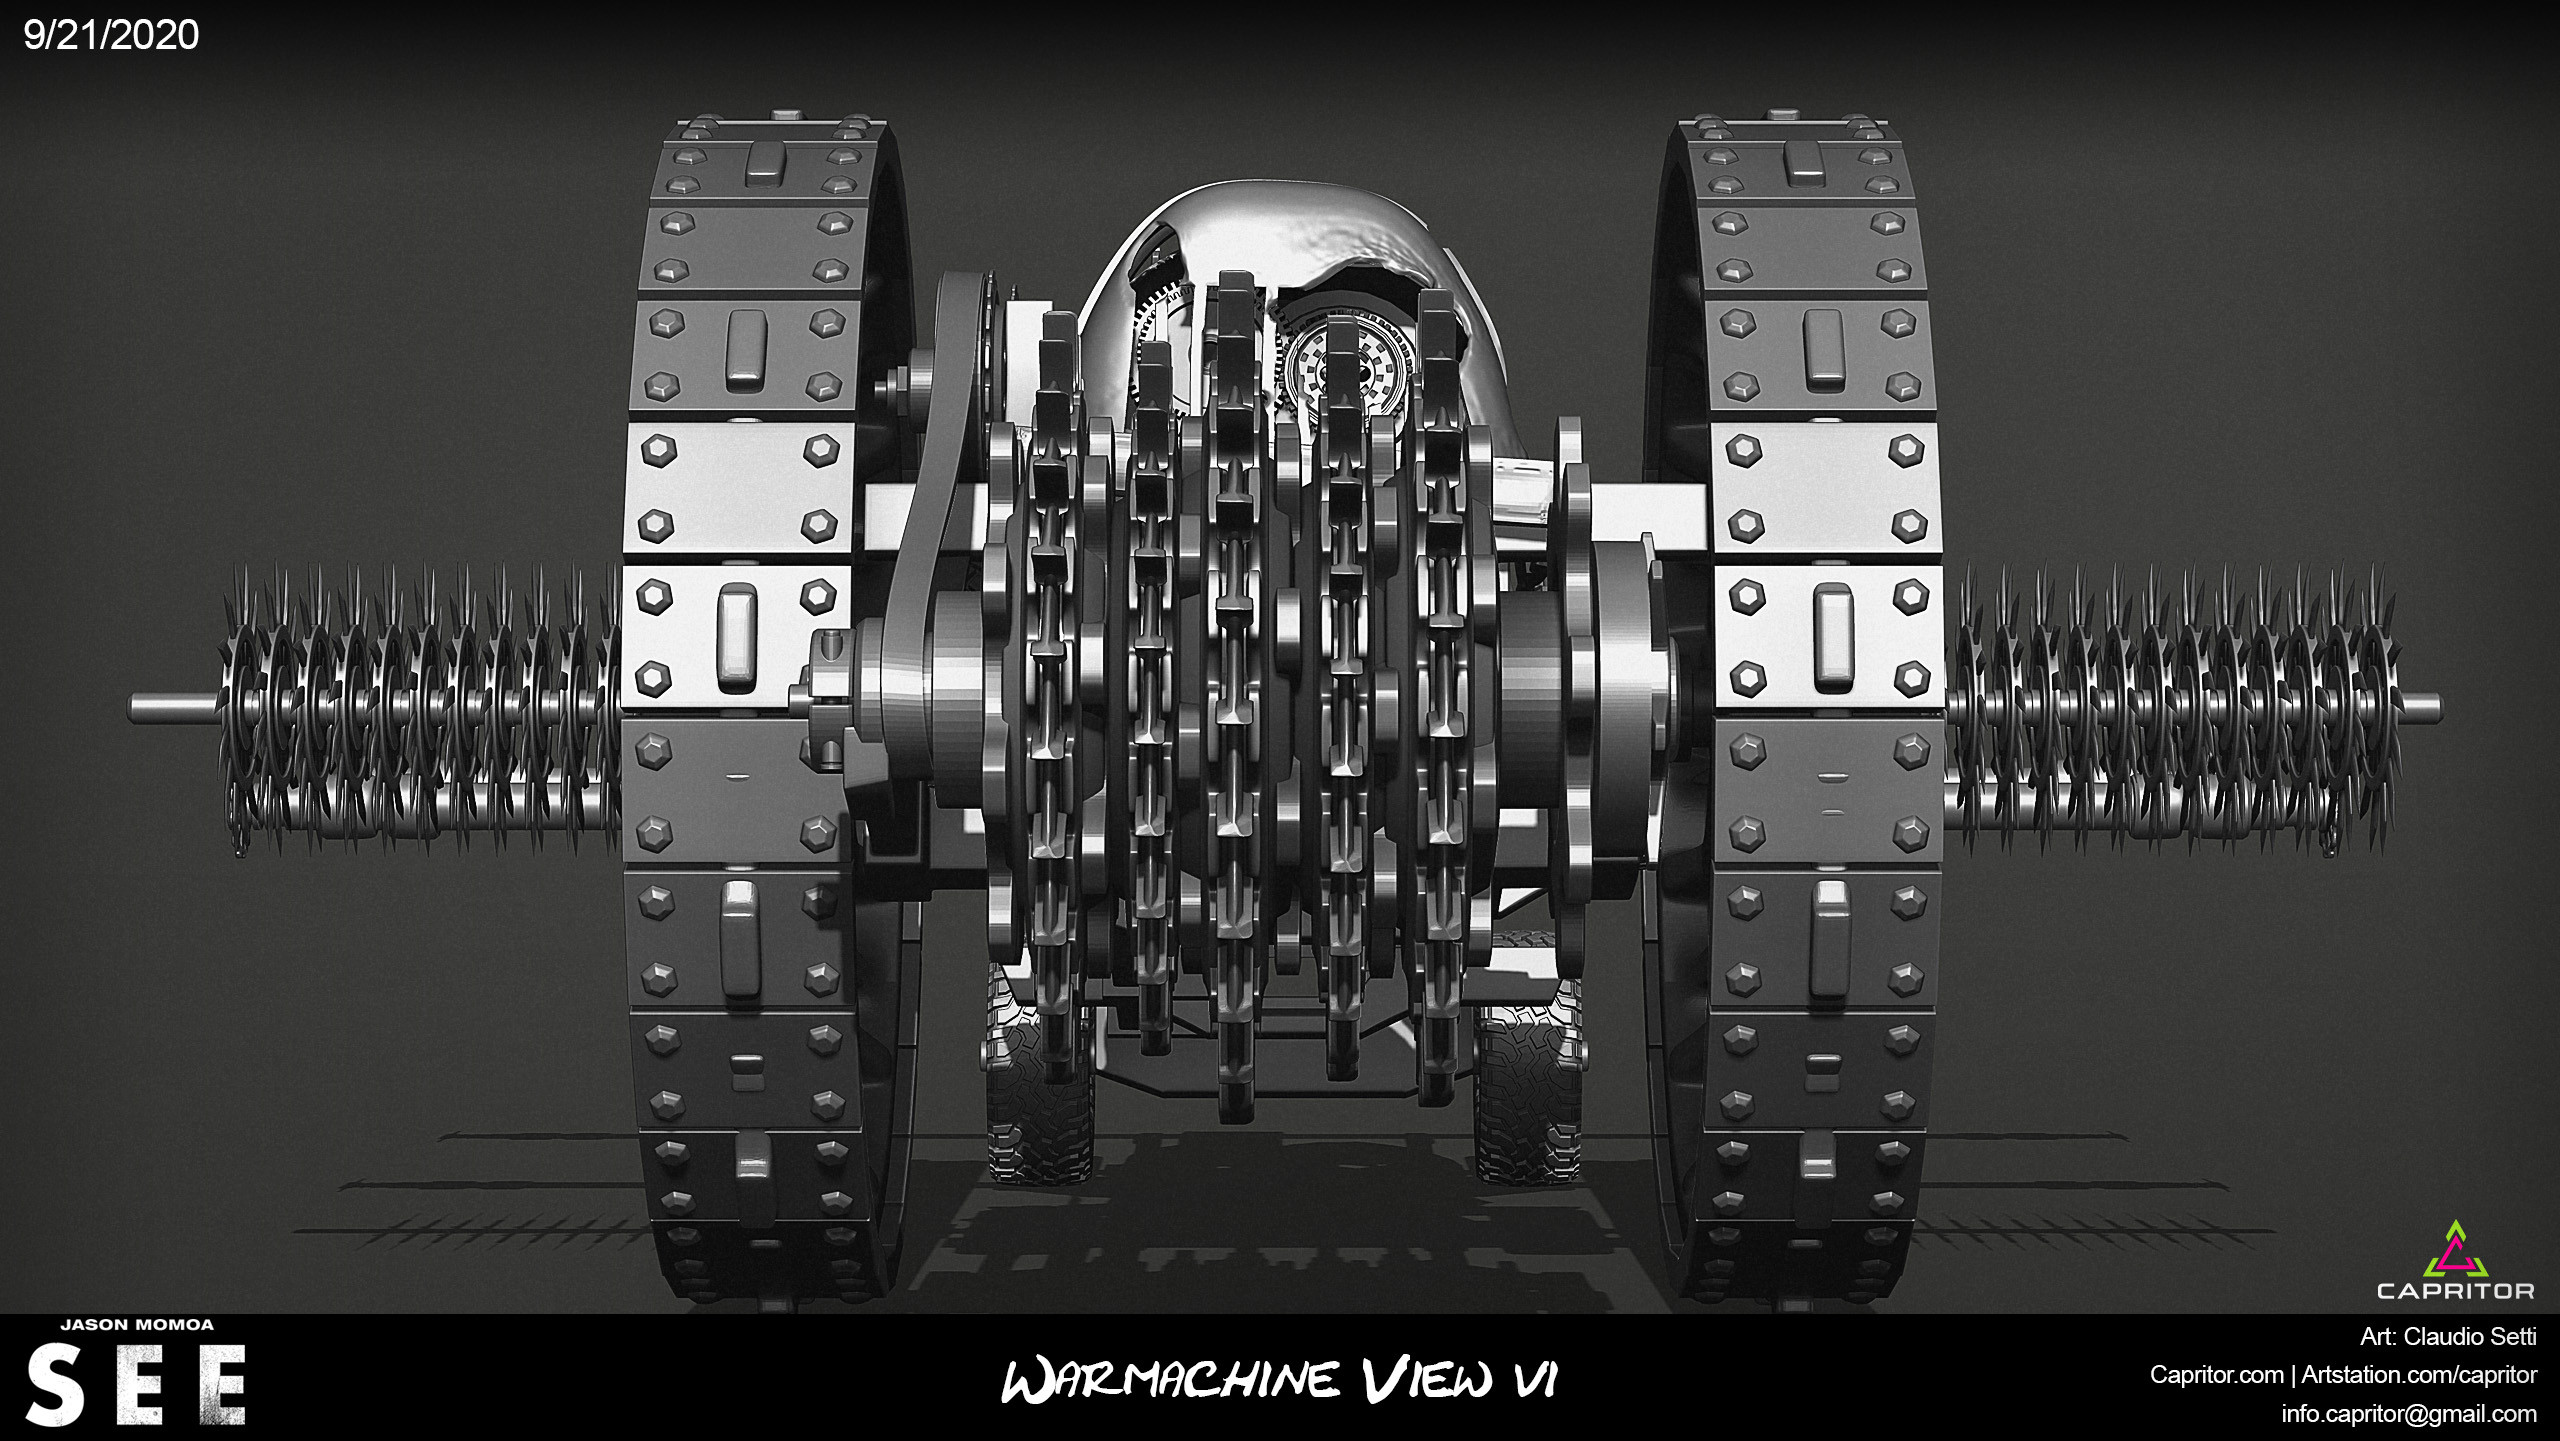 Jason Momoa - SEE - Warmachine Concept Design View 6